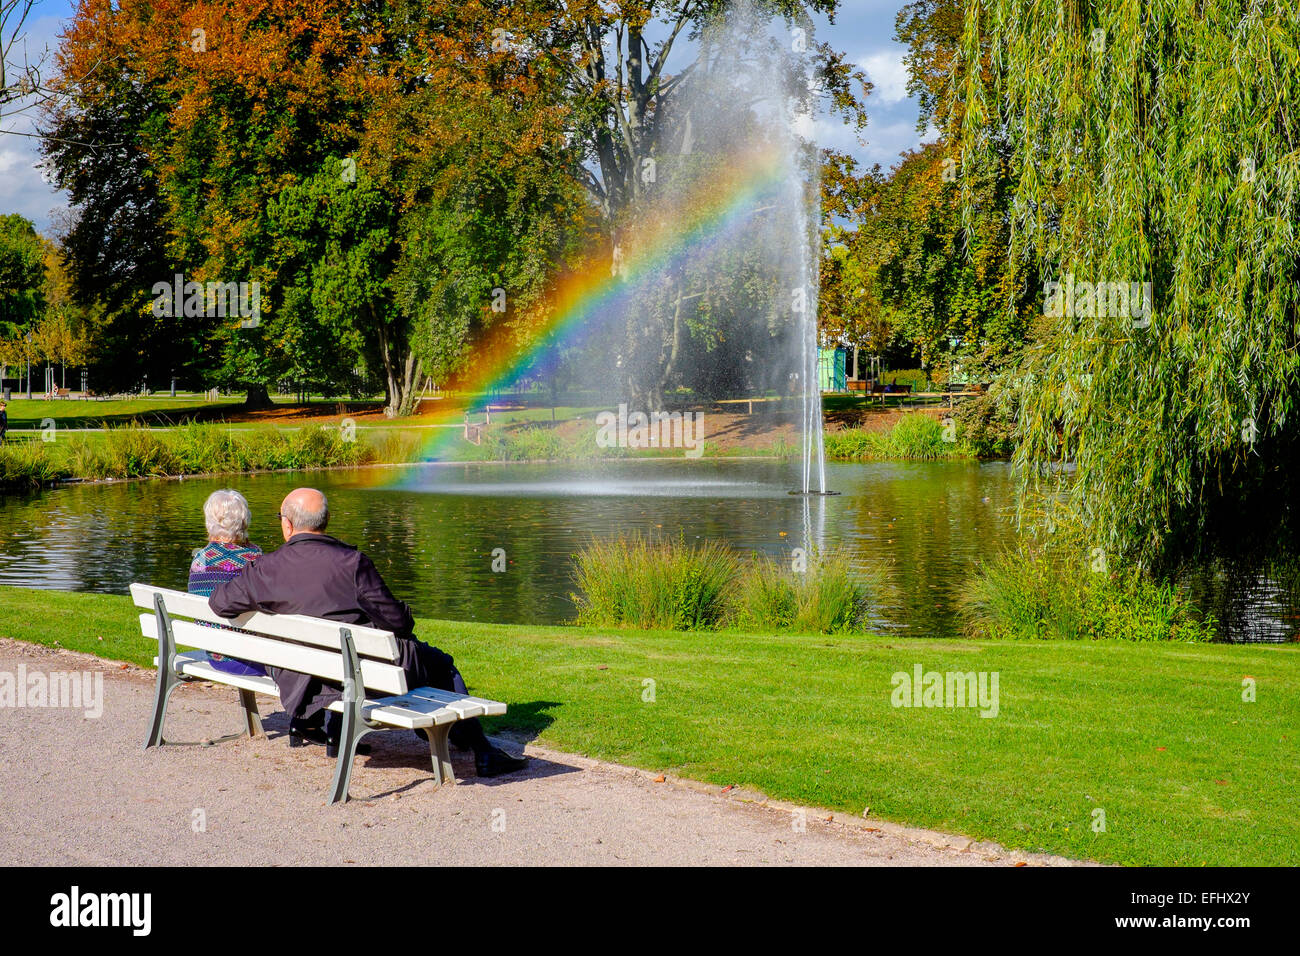 Elderly couple on bench, jet of water with rainbow, Parc de l'Orangerie park, Strasbourg, Alsace, France, Europe Stock Photo